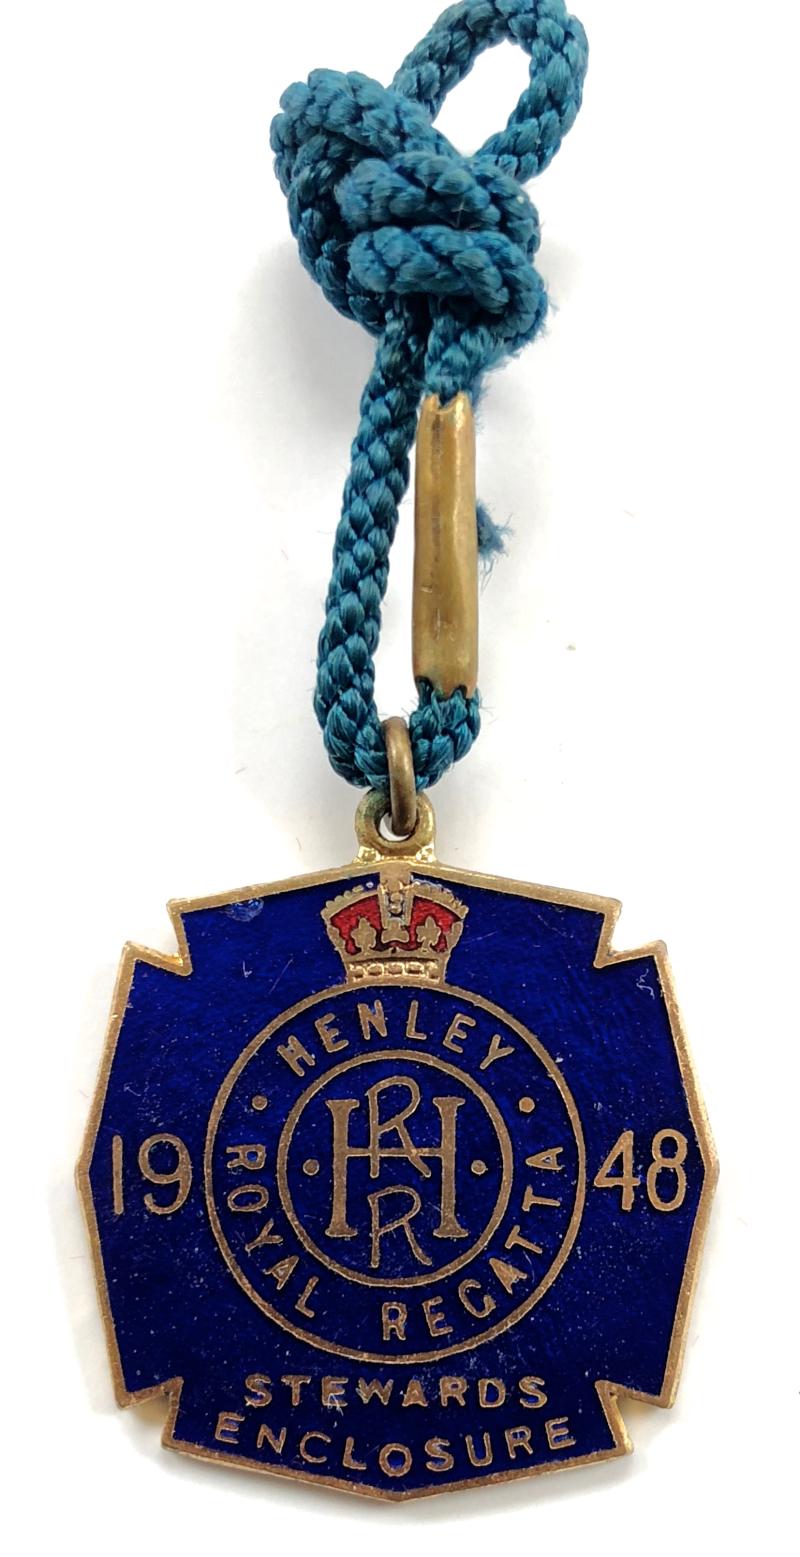 1948 Henley Royal Regatta stewards enclosure badge